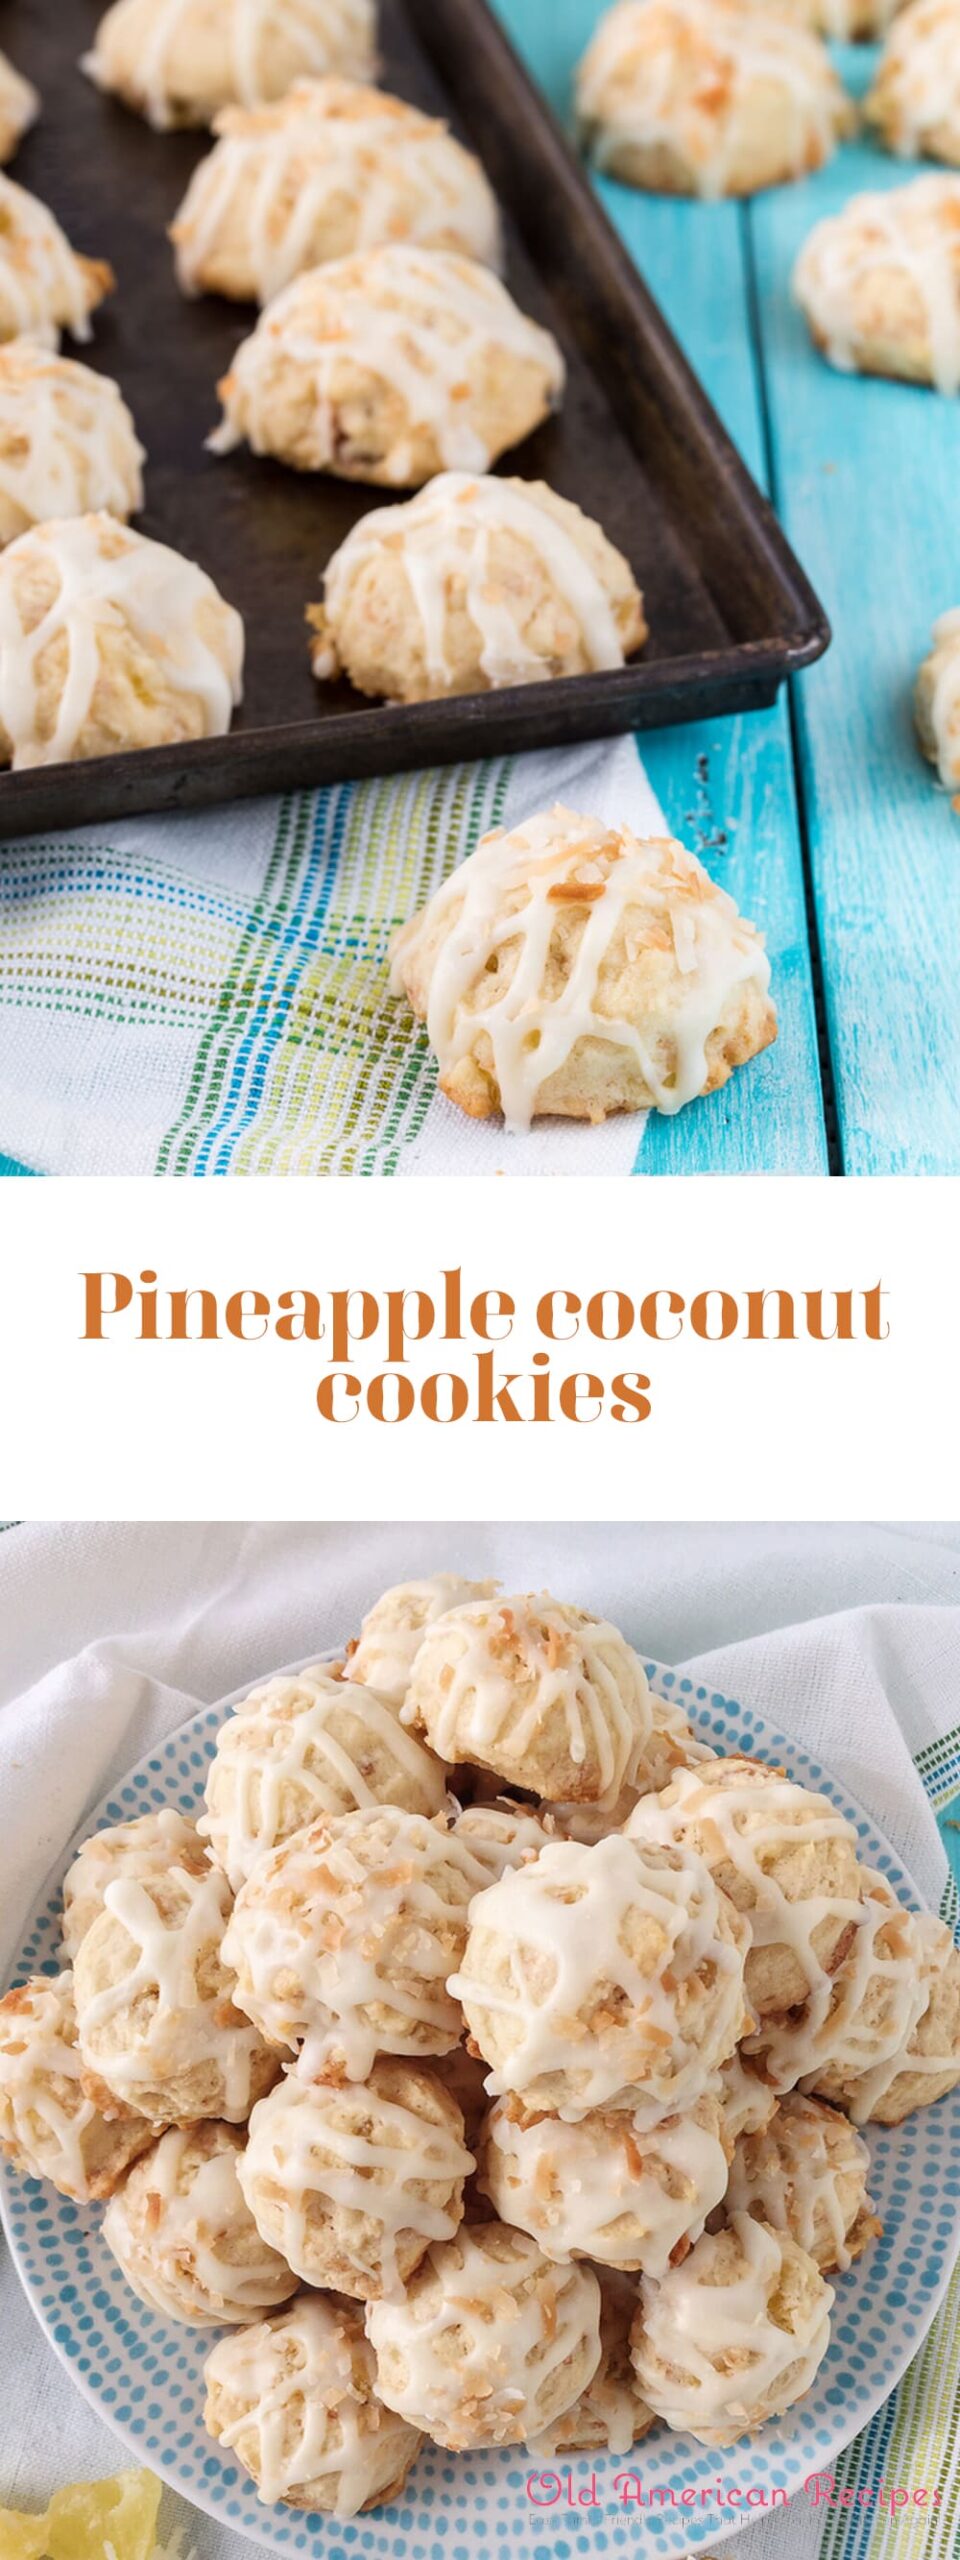 Pineapple coconut cookies